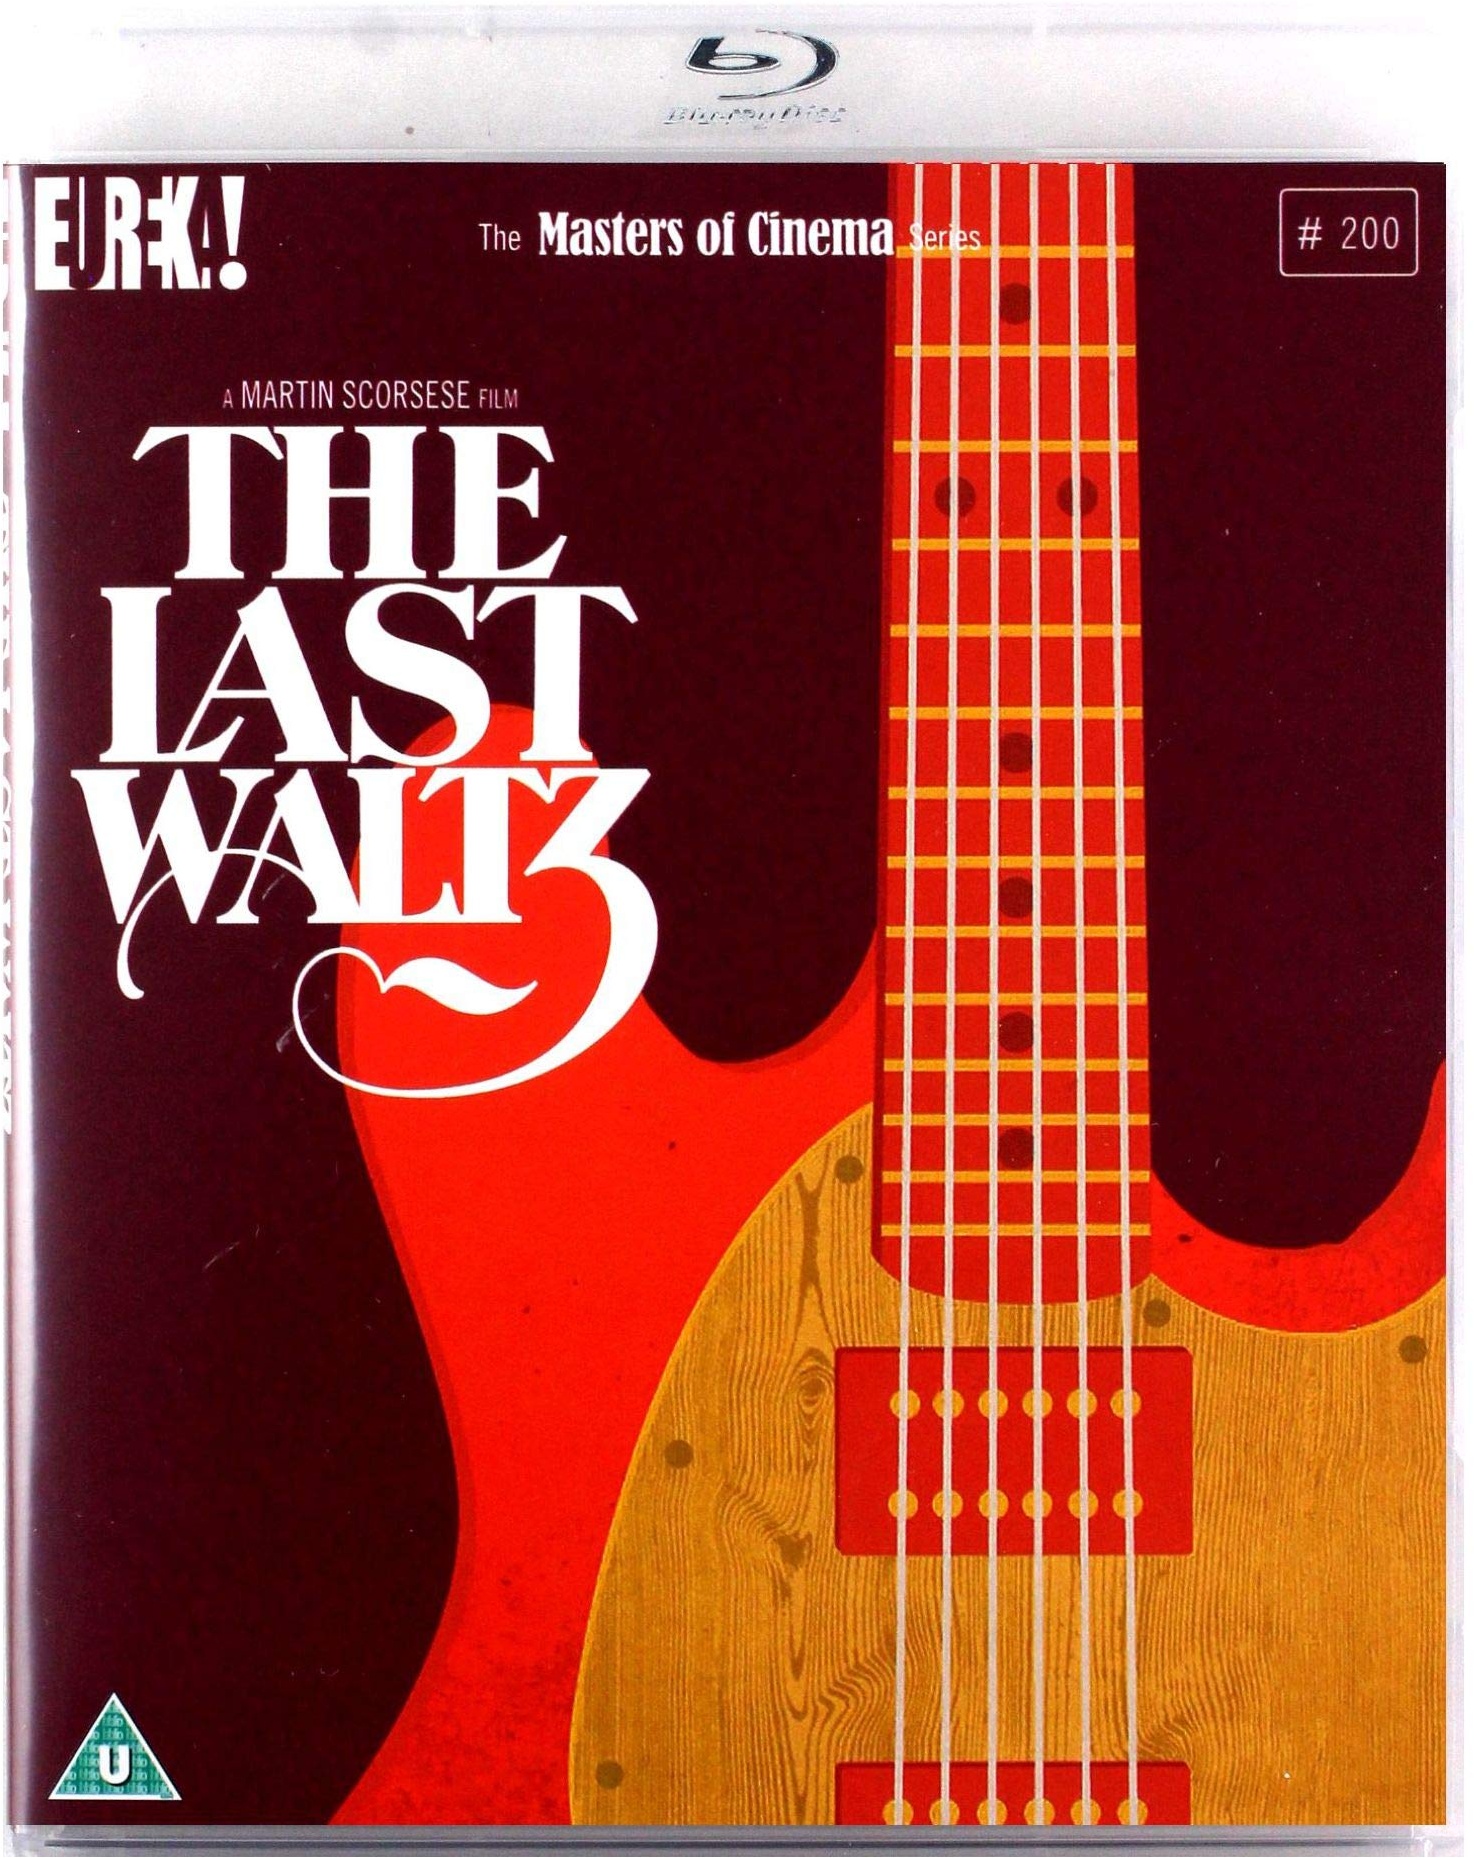 THE LAST WALTZ (Masters of Cinema) STANDARD EDITION BLU-RAY